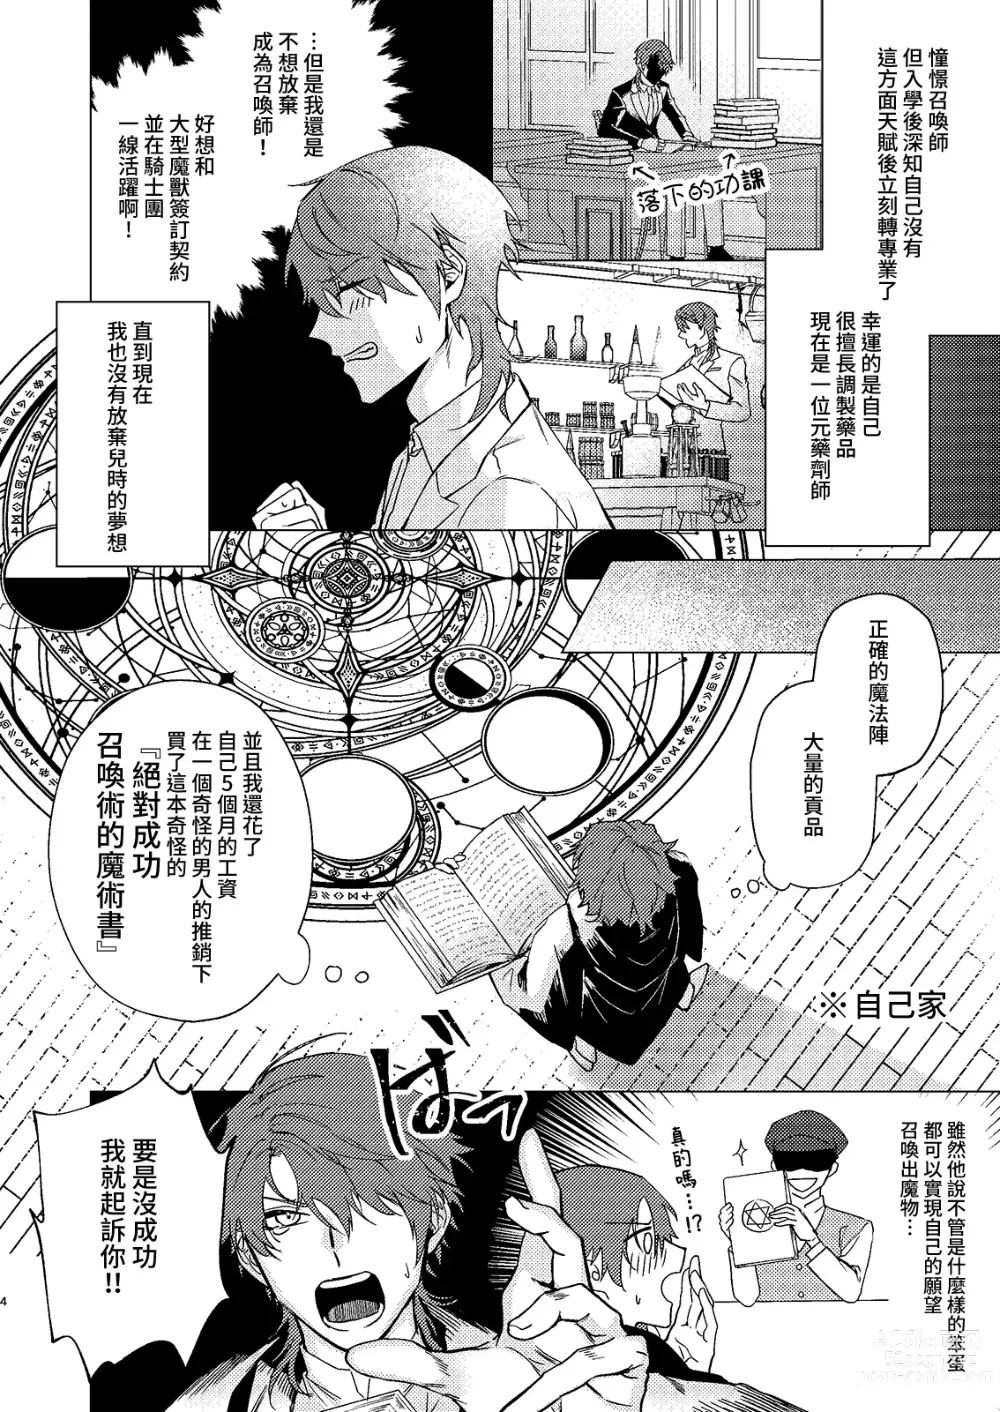 Page 3 of manga 多多调教我吧淫魔大人1